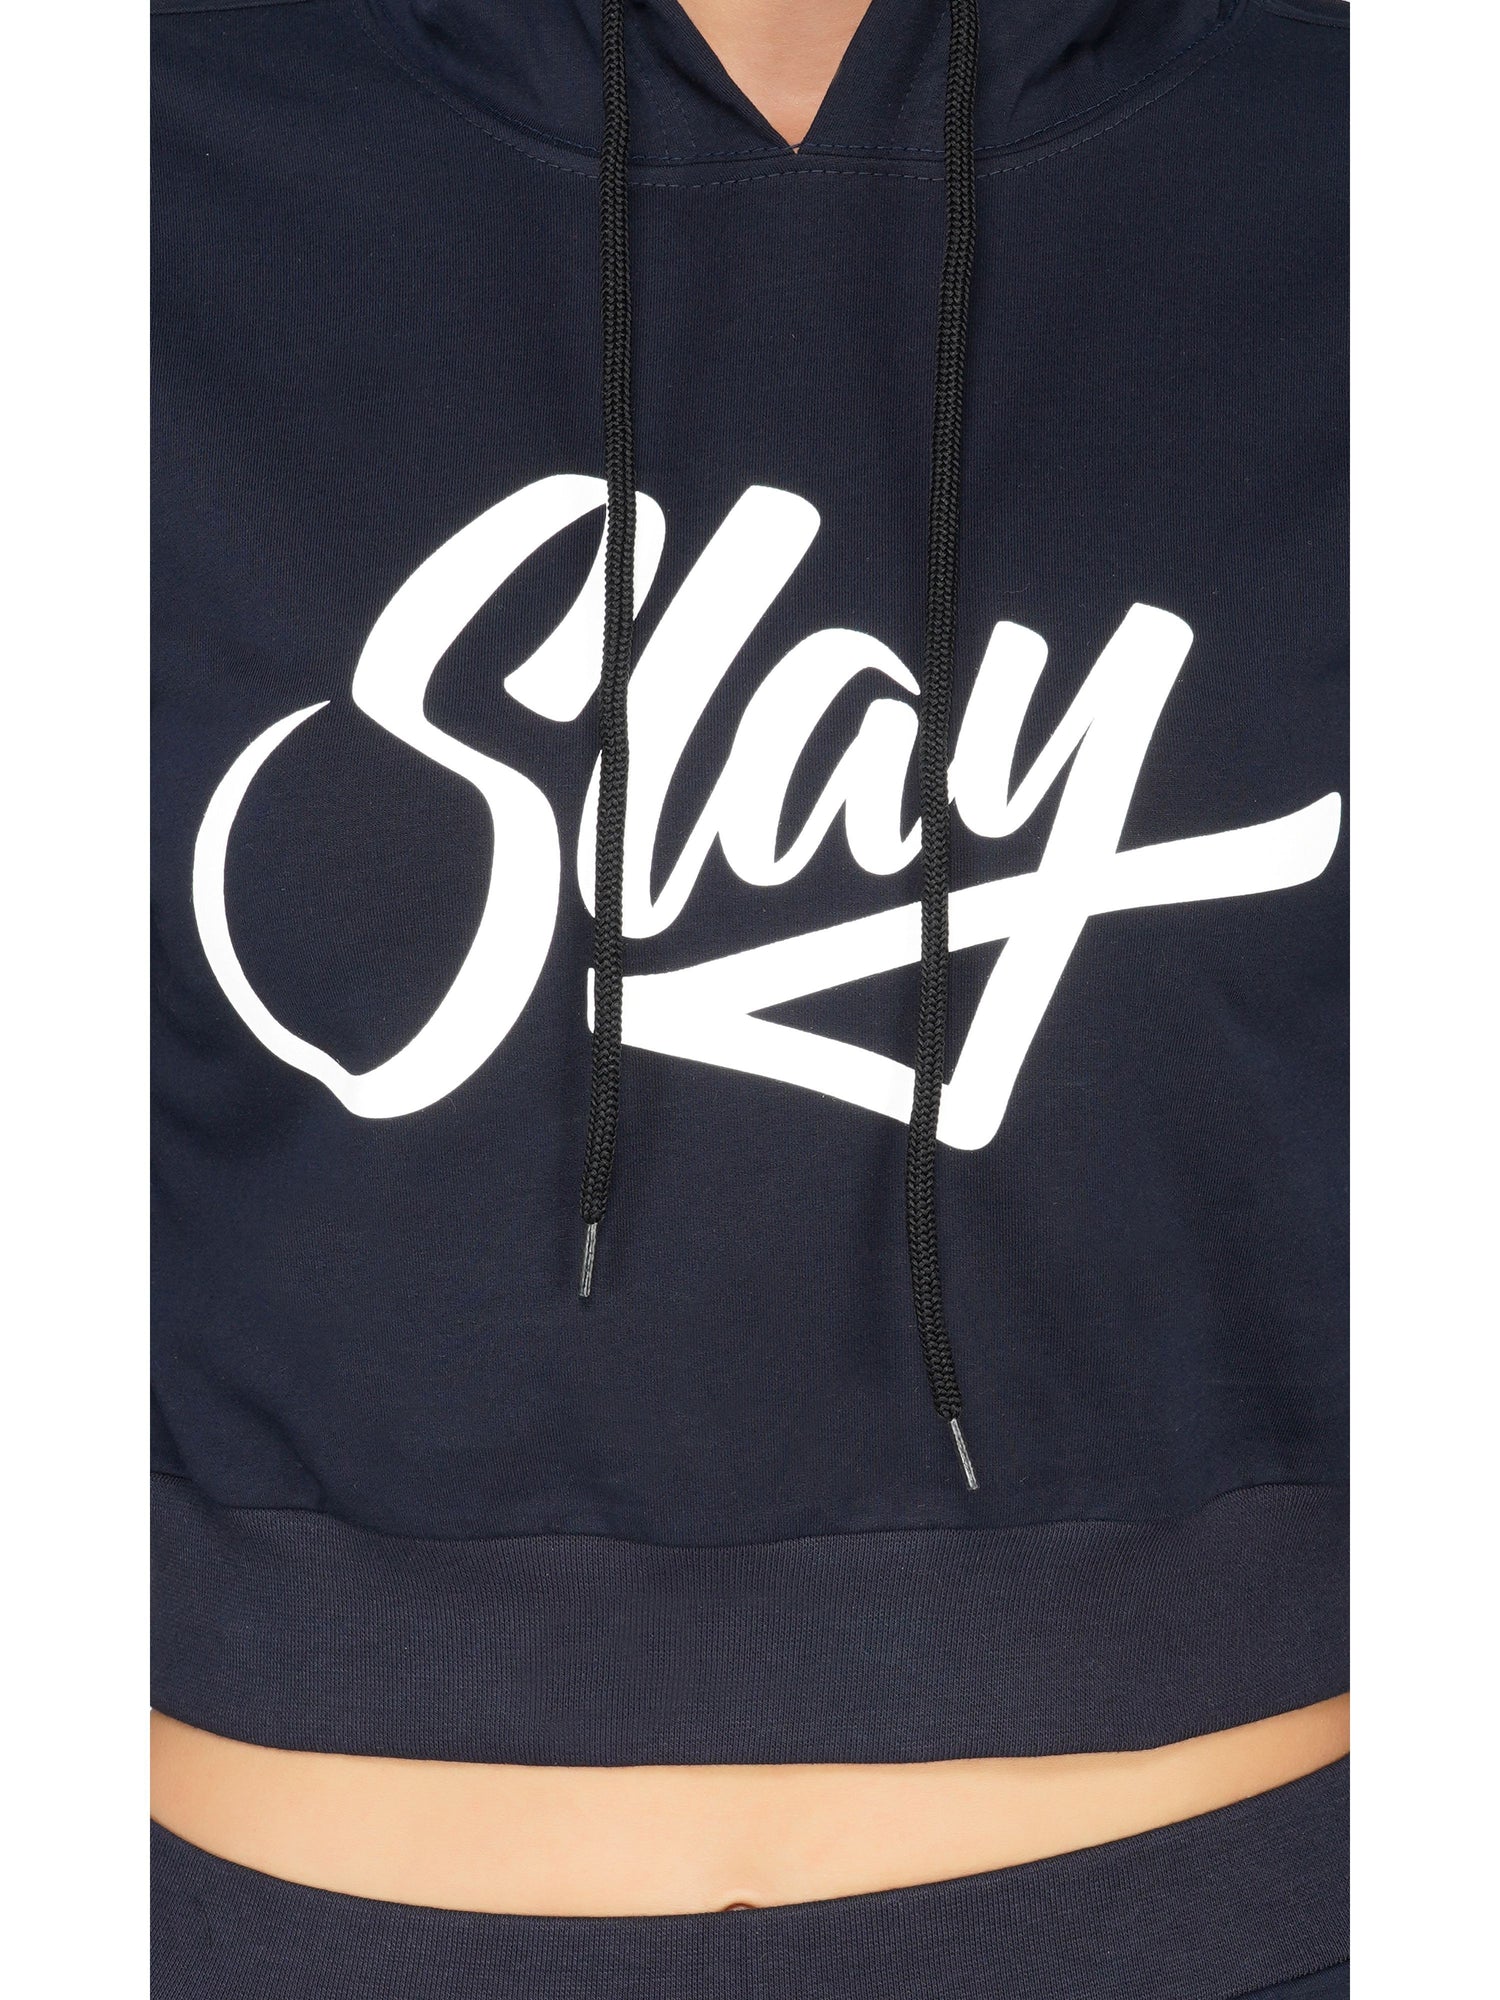 SLAY. Women's Printed Cropped Navy Blue Hoodie-clothing-to-slay.myshopify.com-Crop Hoodie